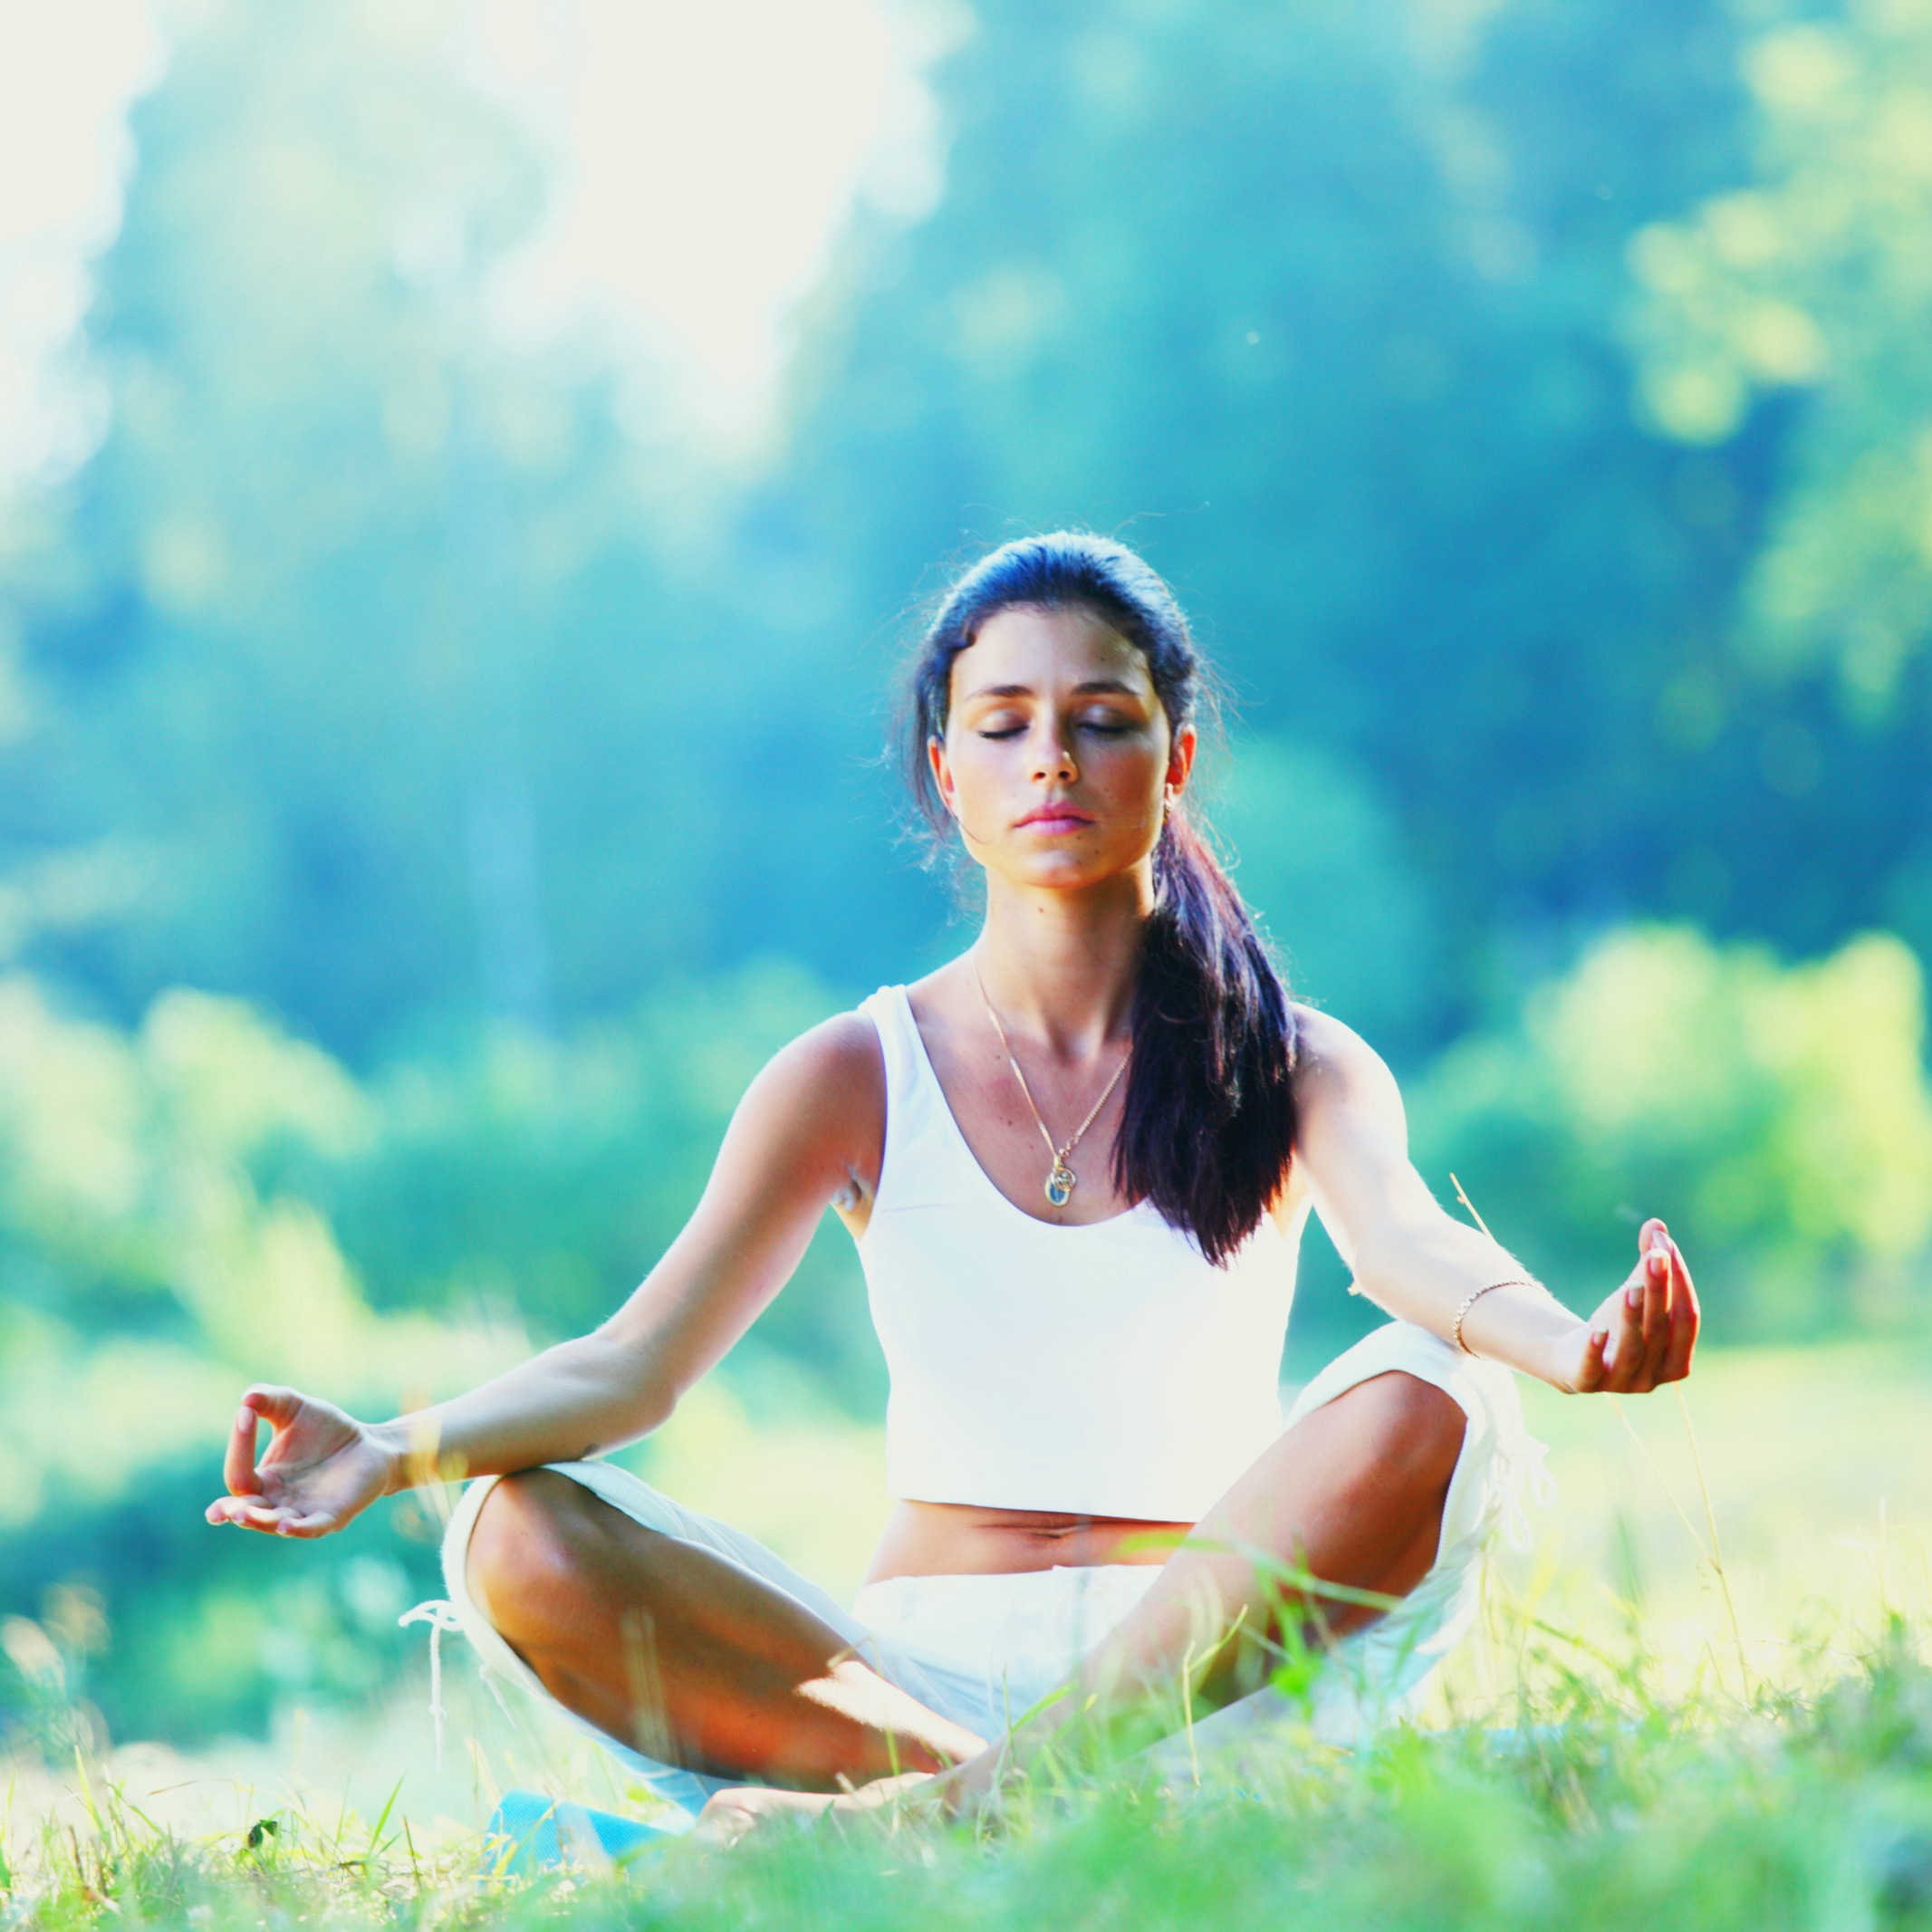 Meditation and Yoga Change DNA